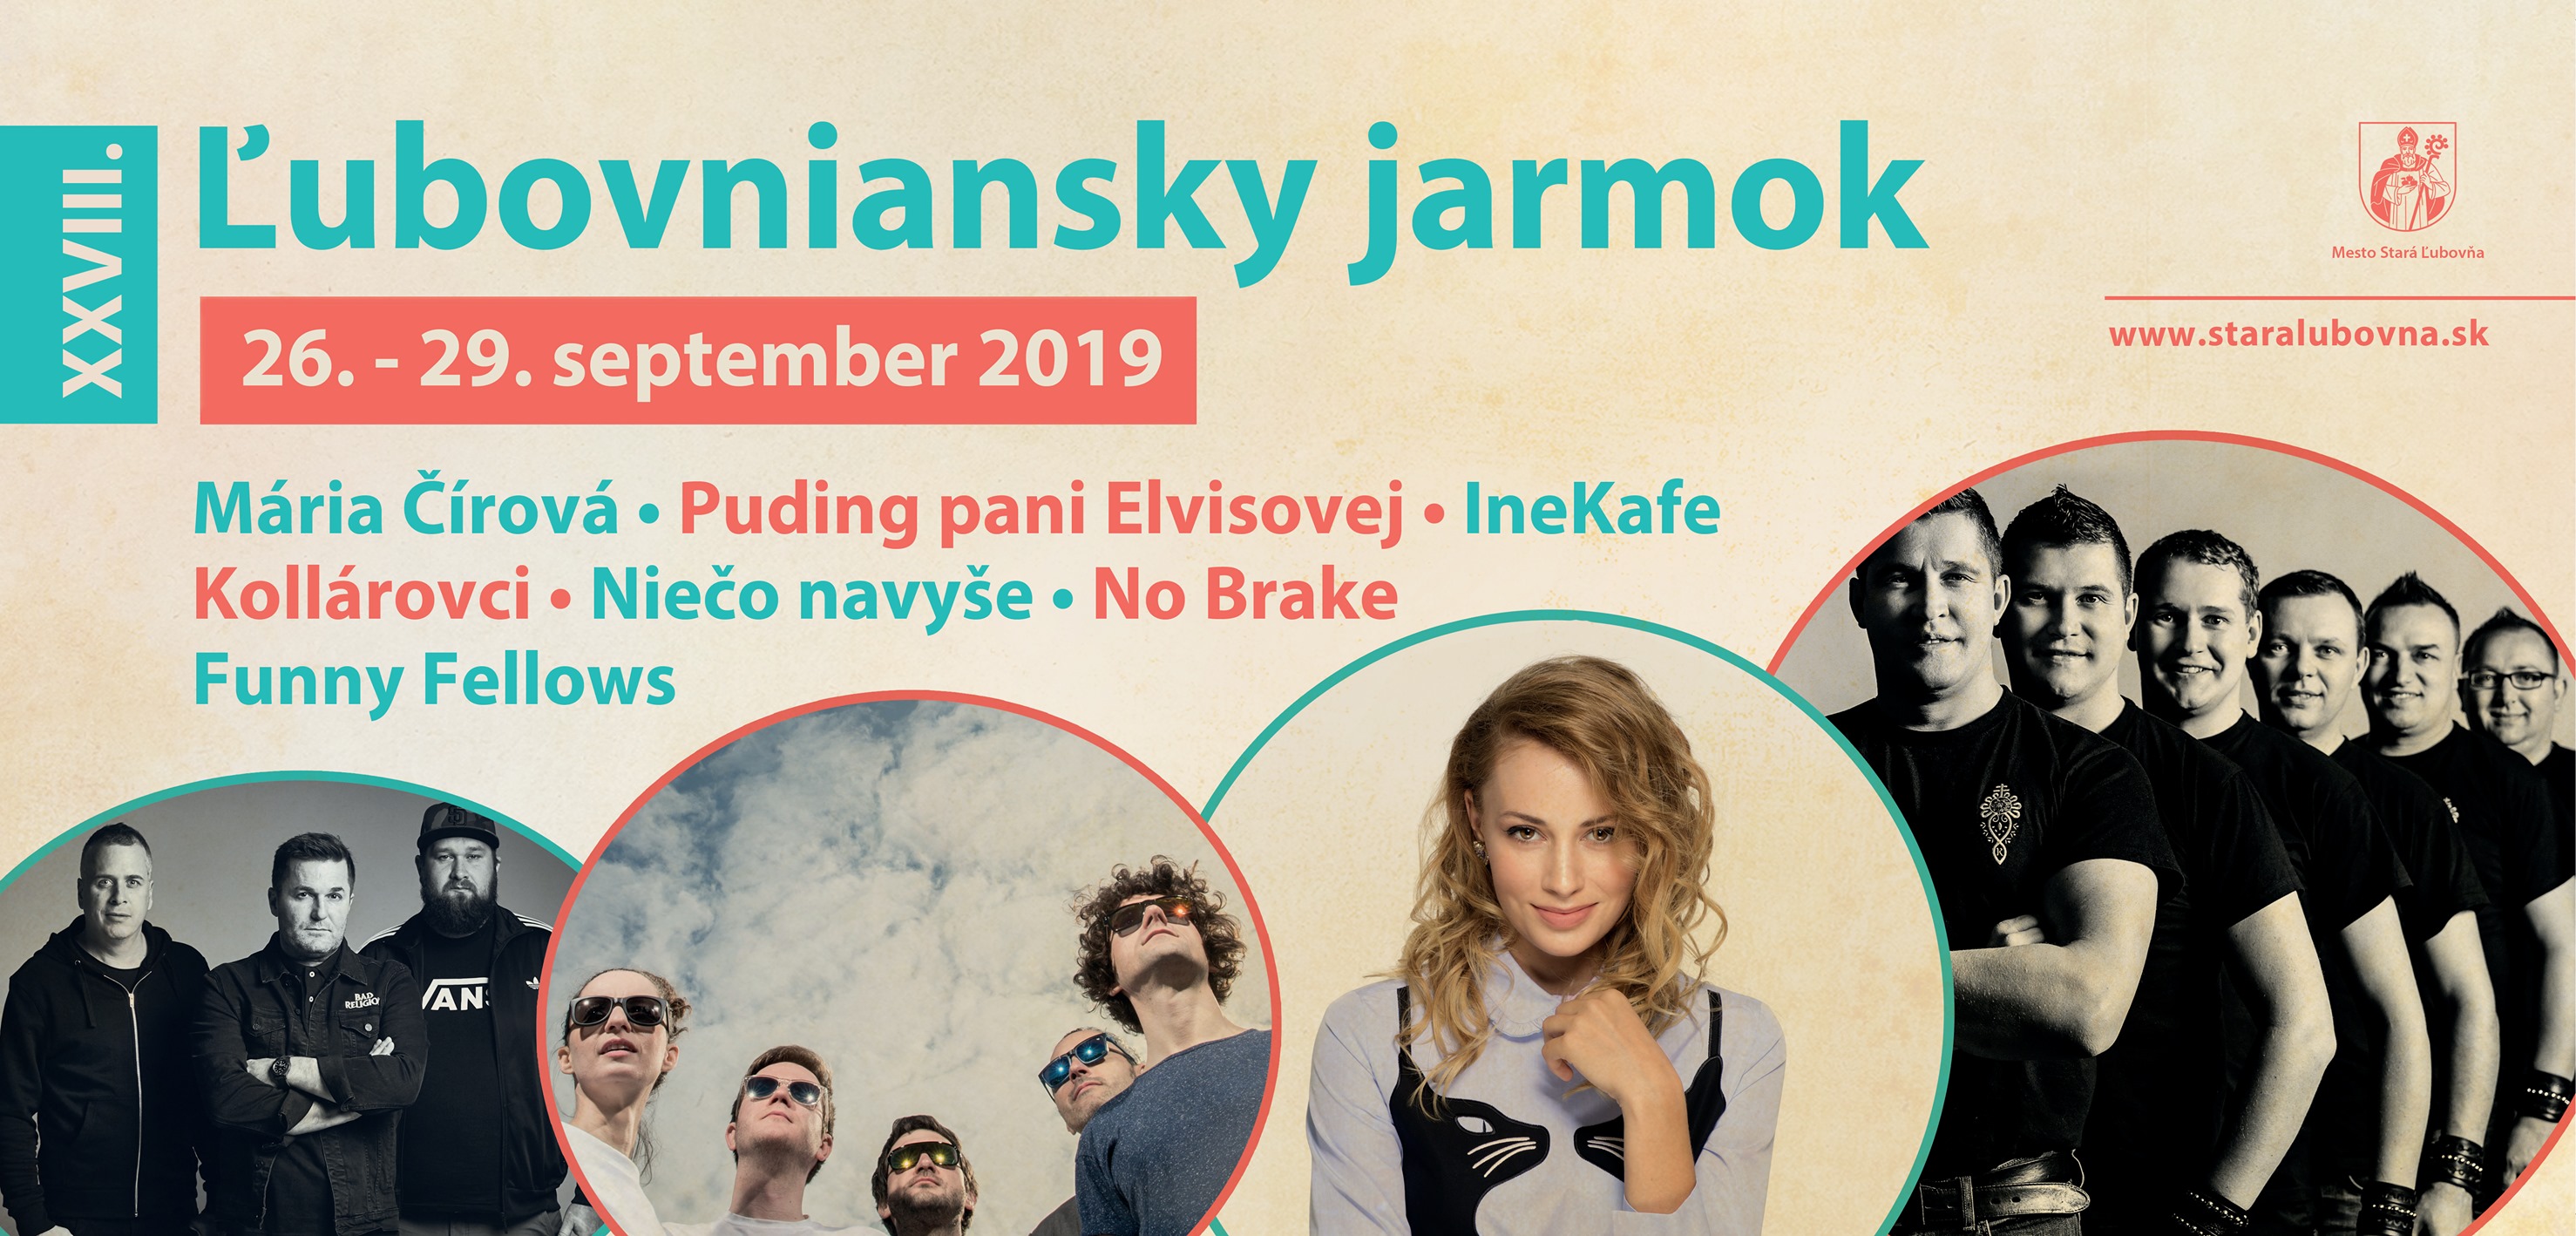 ubovniansky jarmok 2019 - 28. ronk